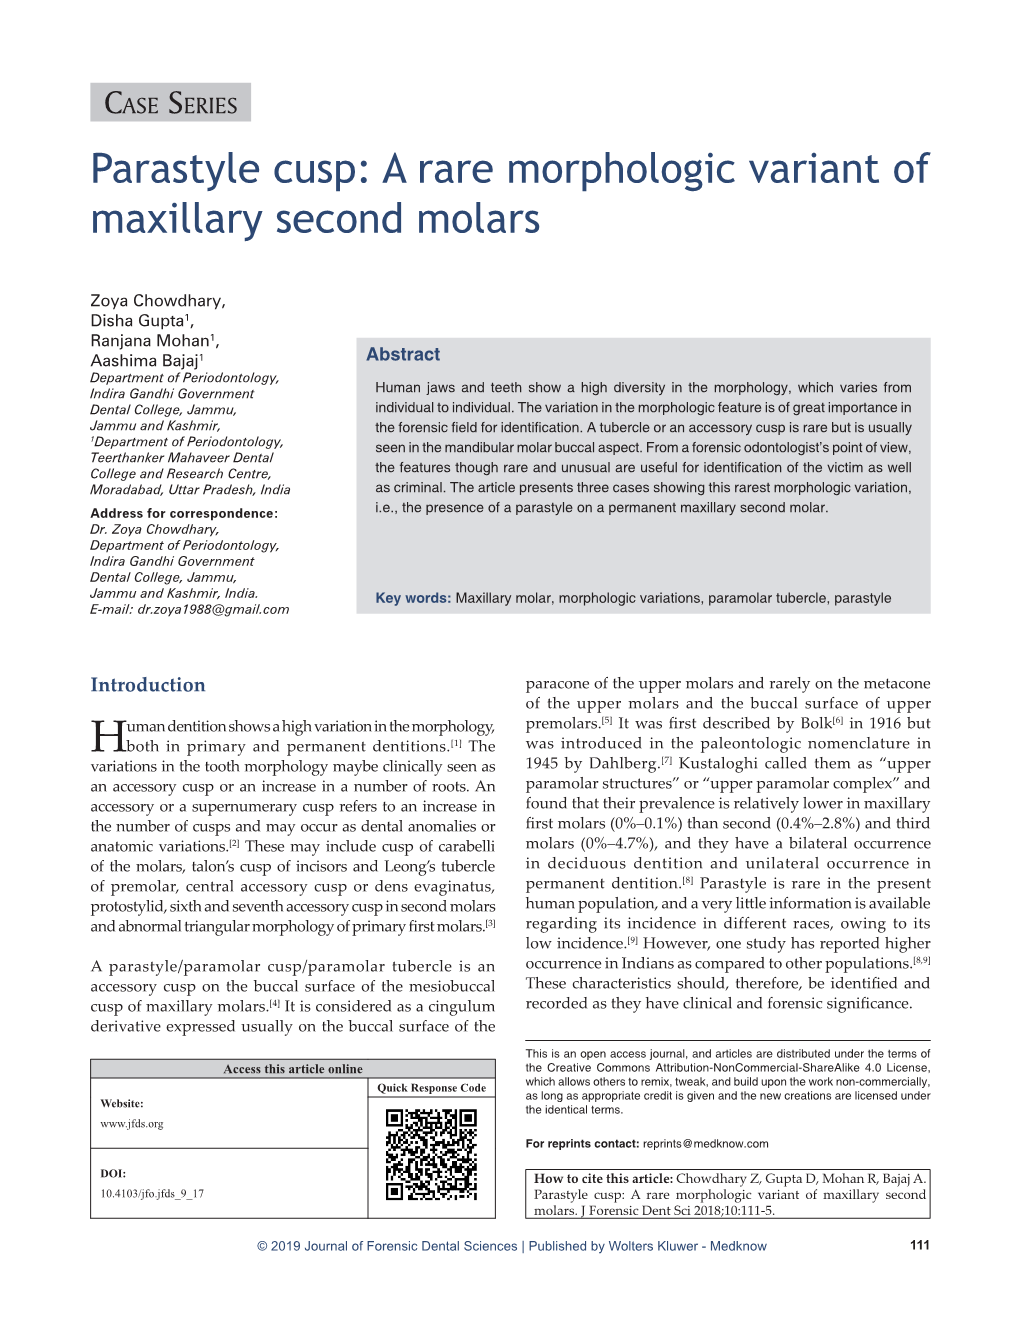 Parastyle Cusp: a Rare Morphologic Variant of Maxillary Second Molars